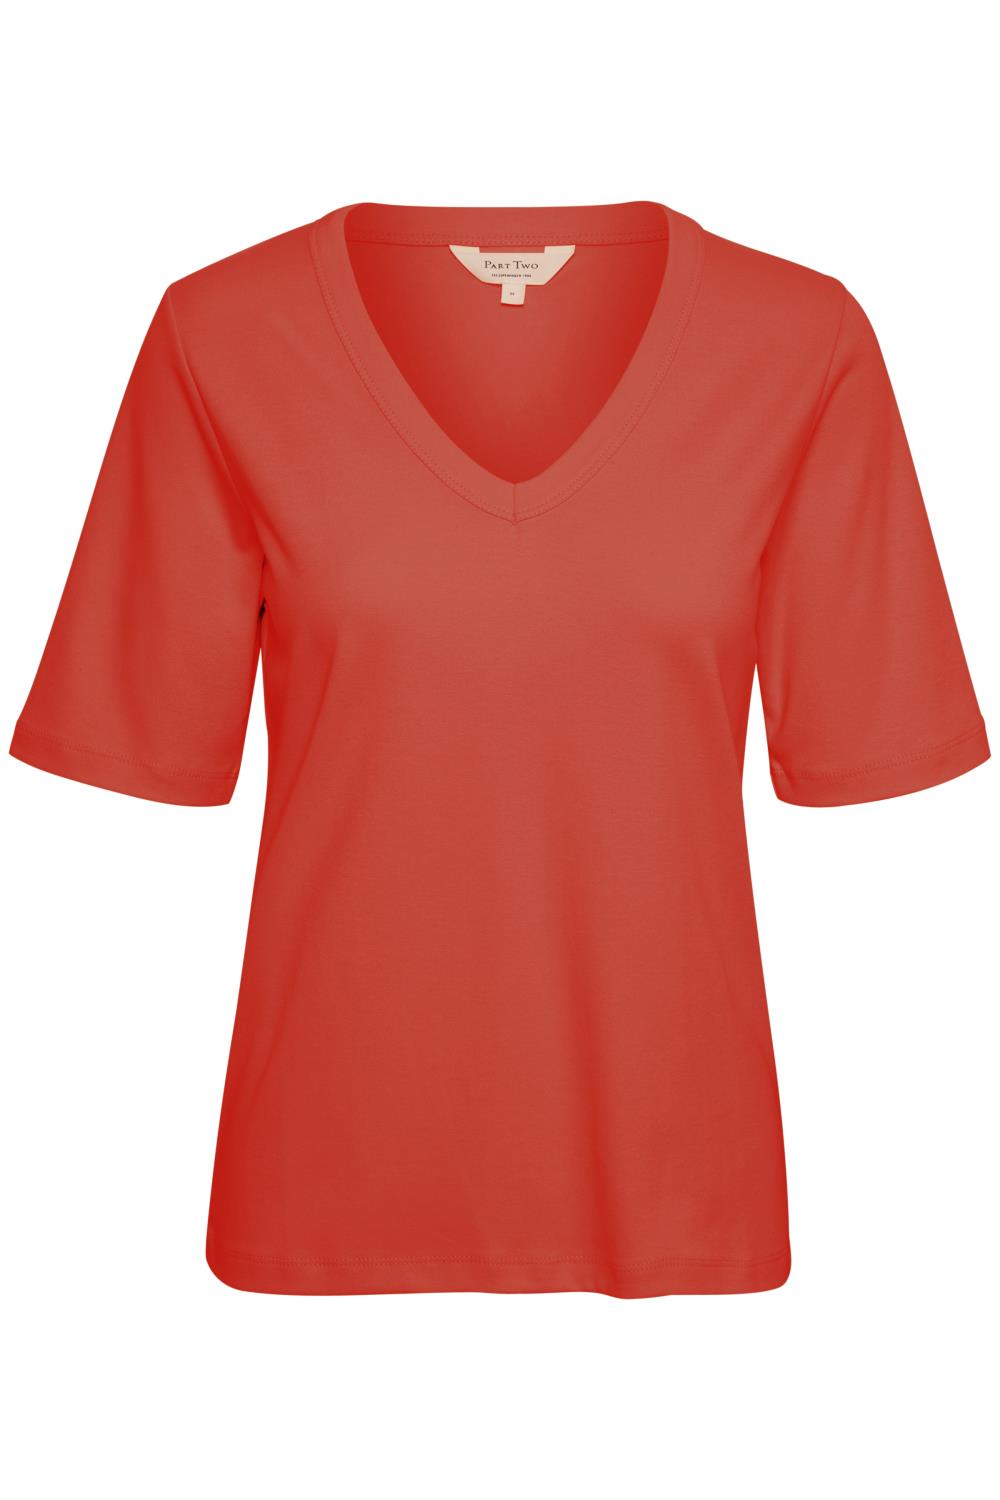 Part Two Ratansa T-shirt, oransje